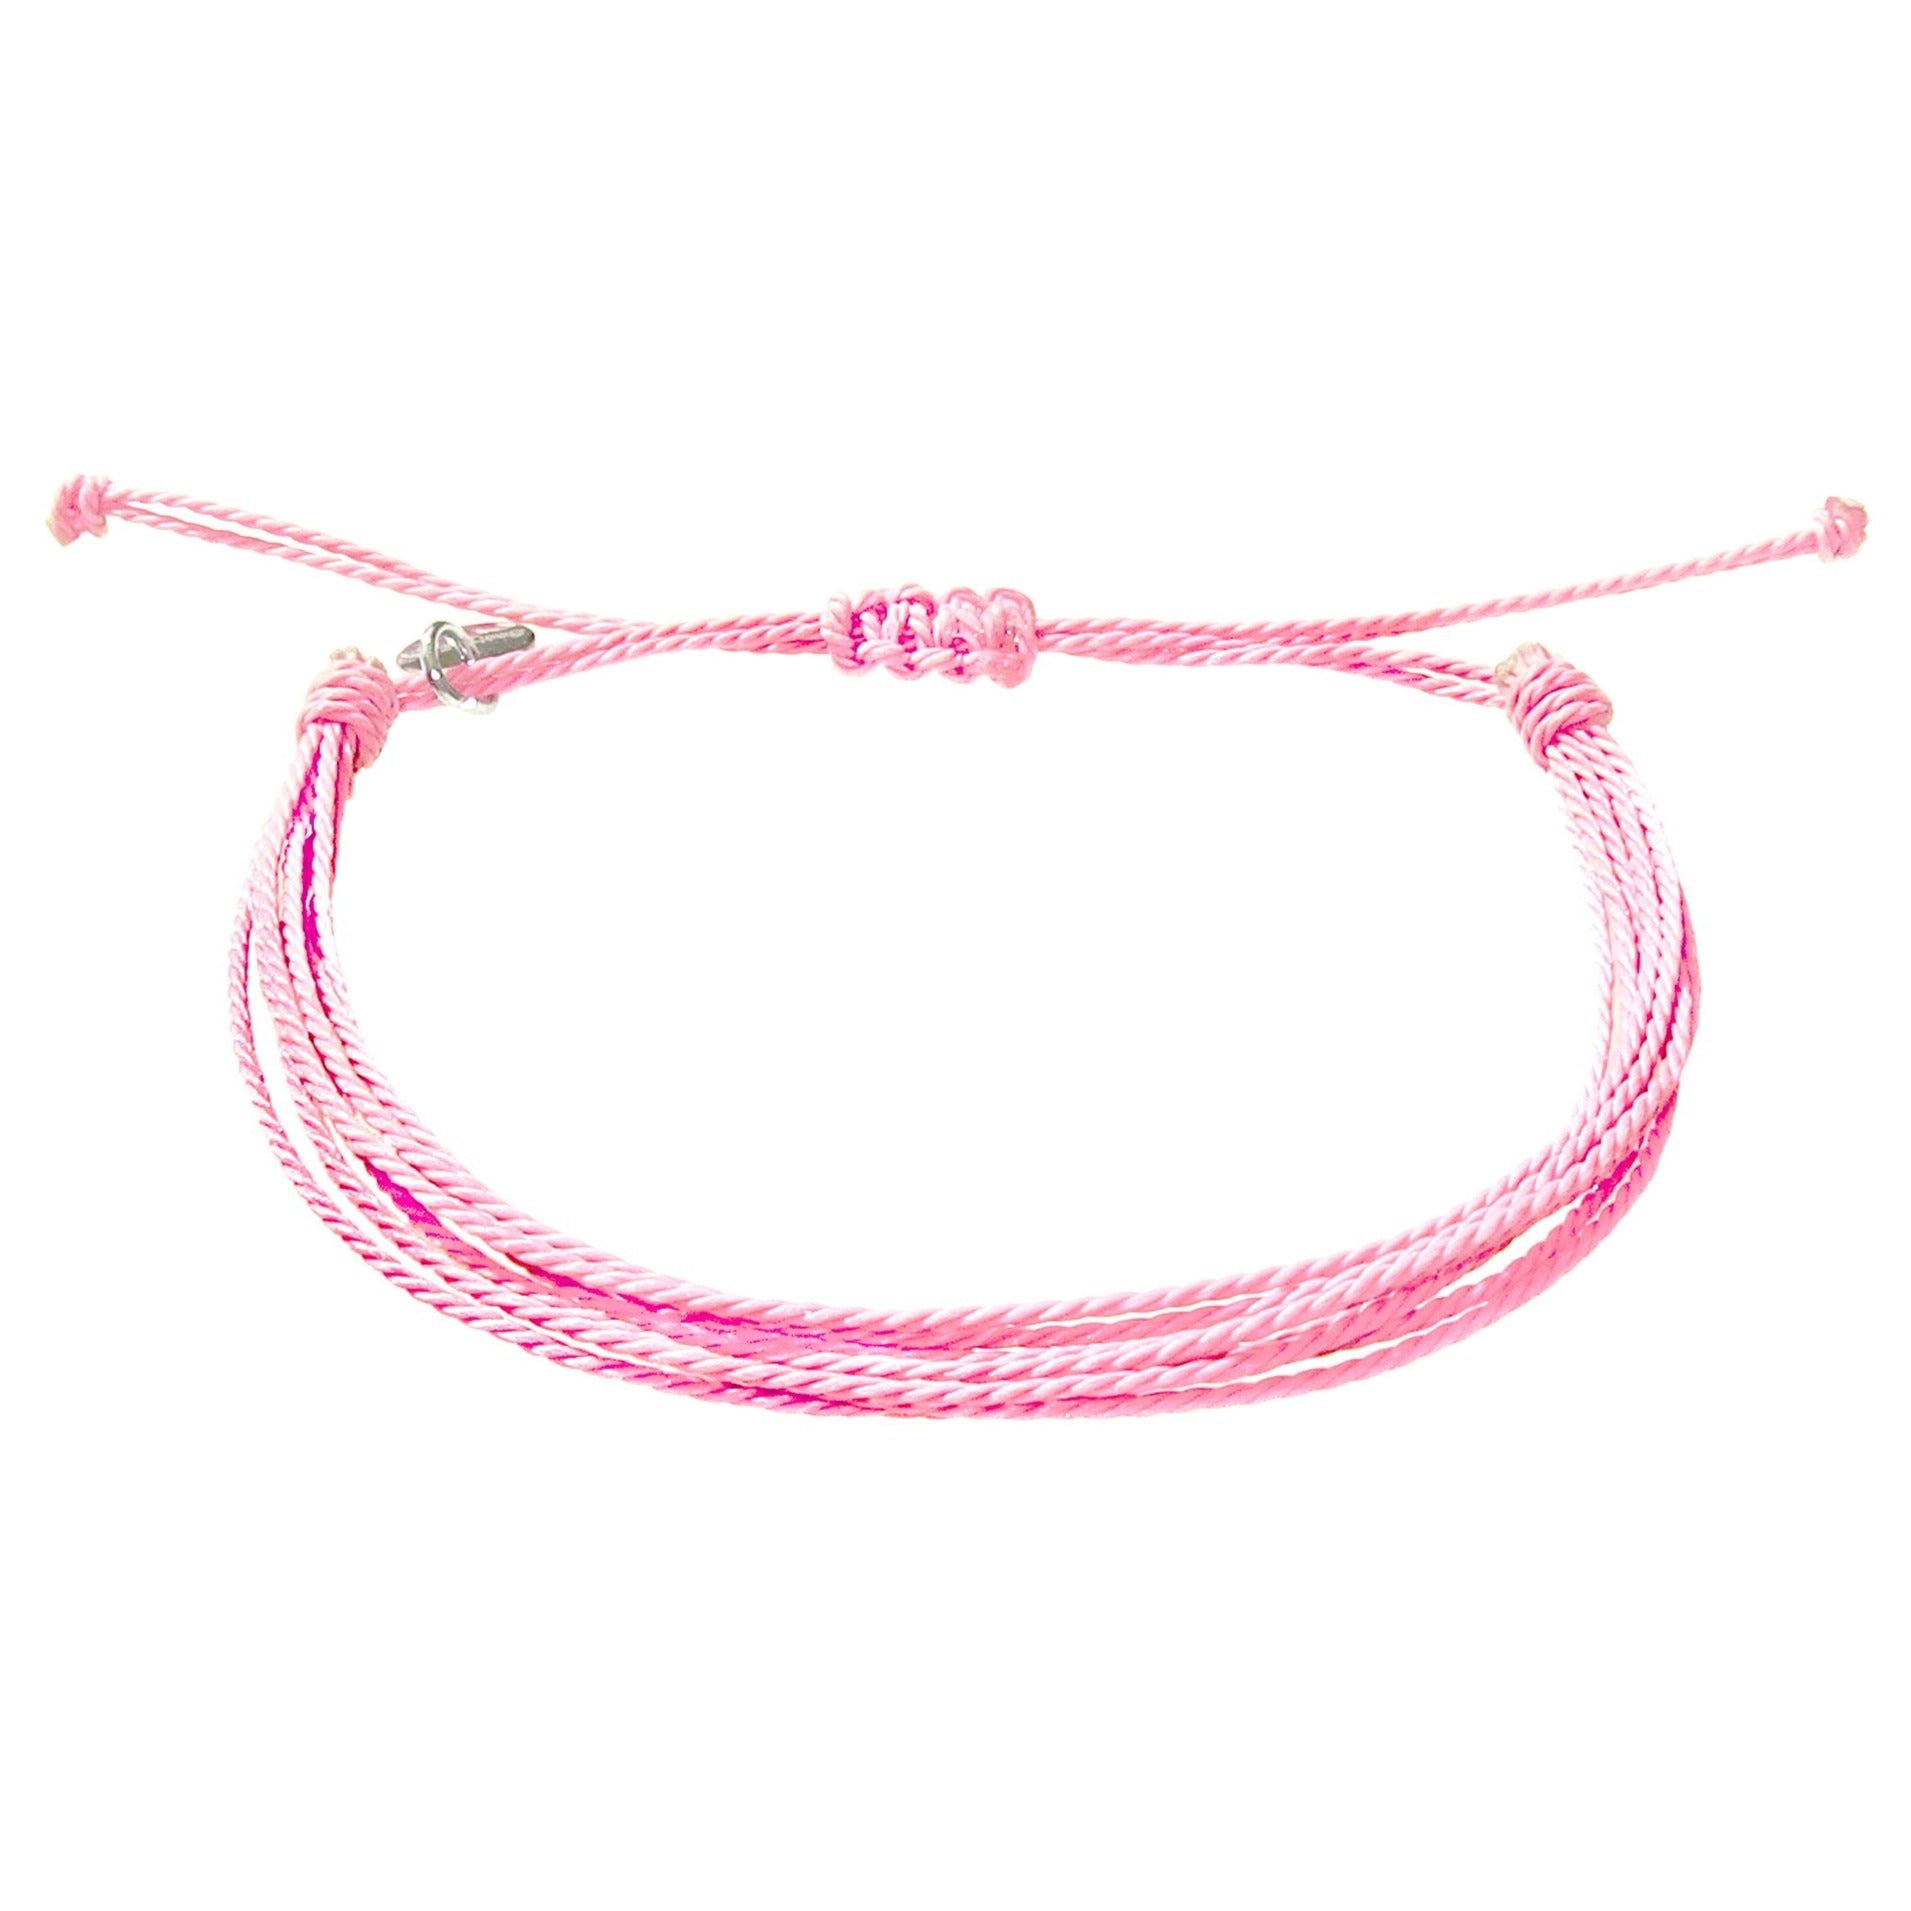 Sasha & Jo bubble gum pink friendship bracelet